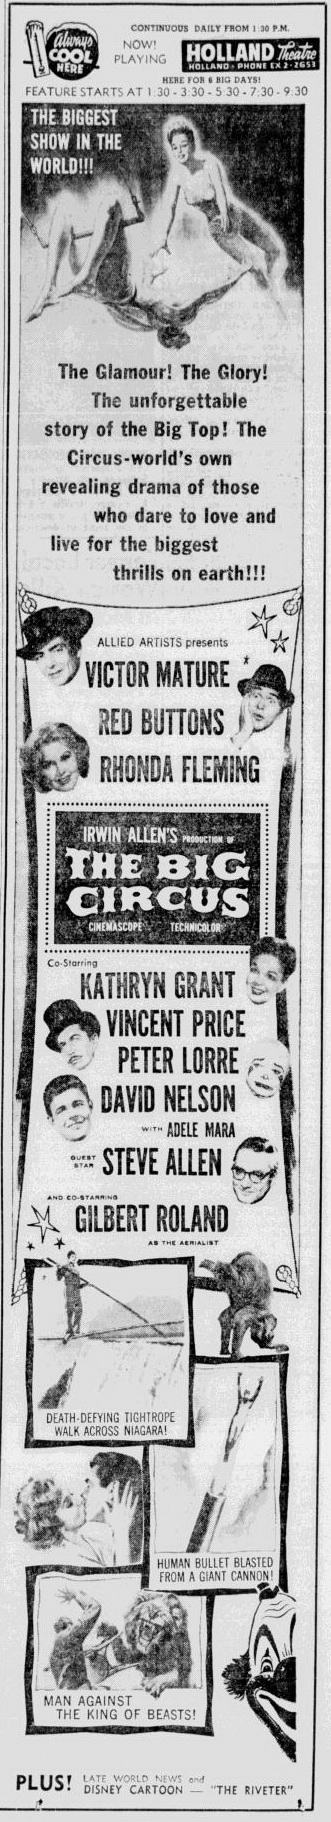 Knickerbocker Theatre - AUG 17 1959 AD